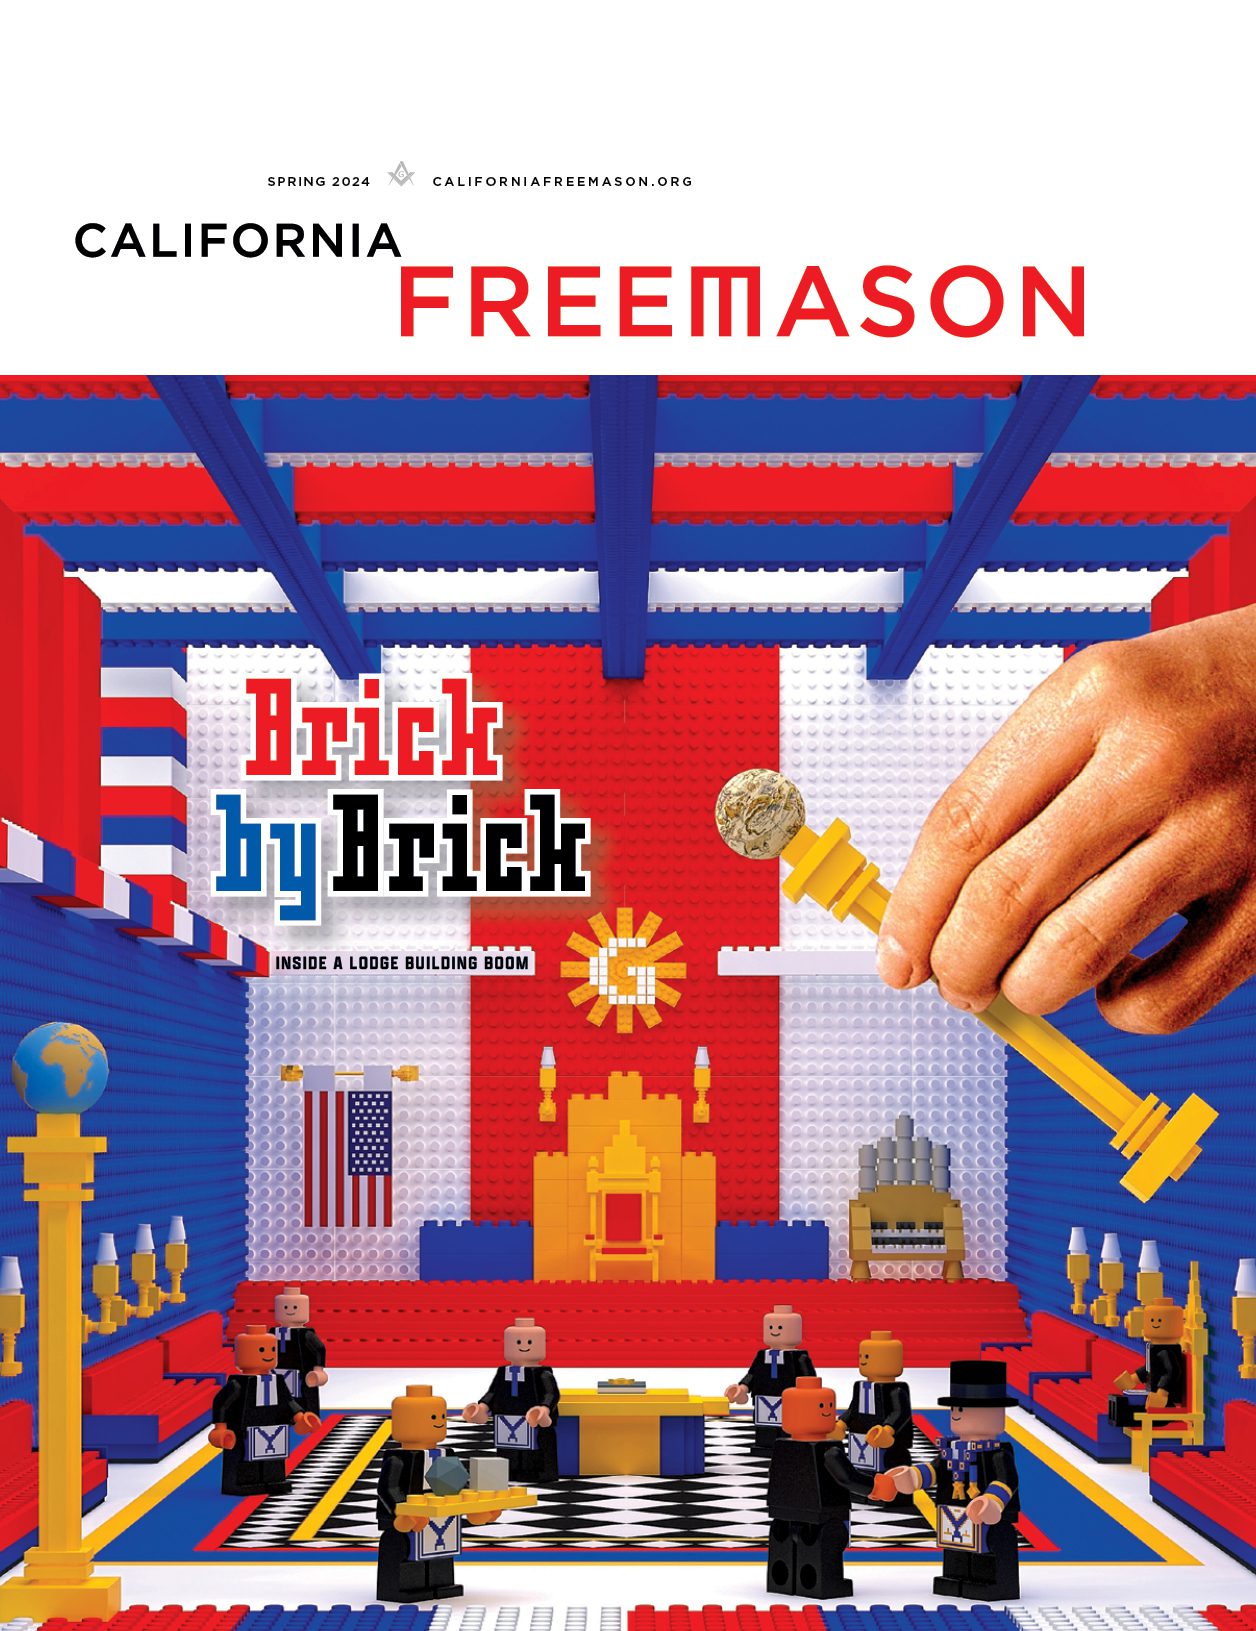 California Freemason: Brick by Brick